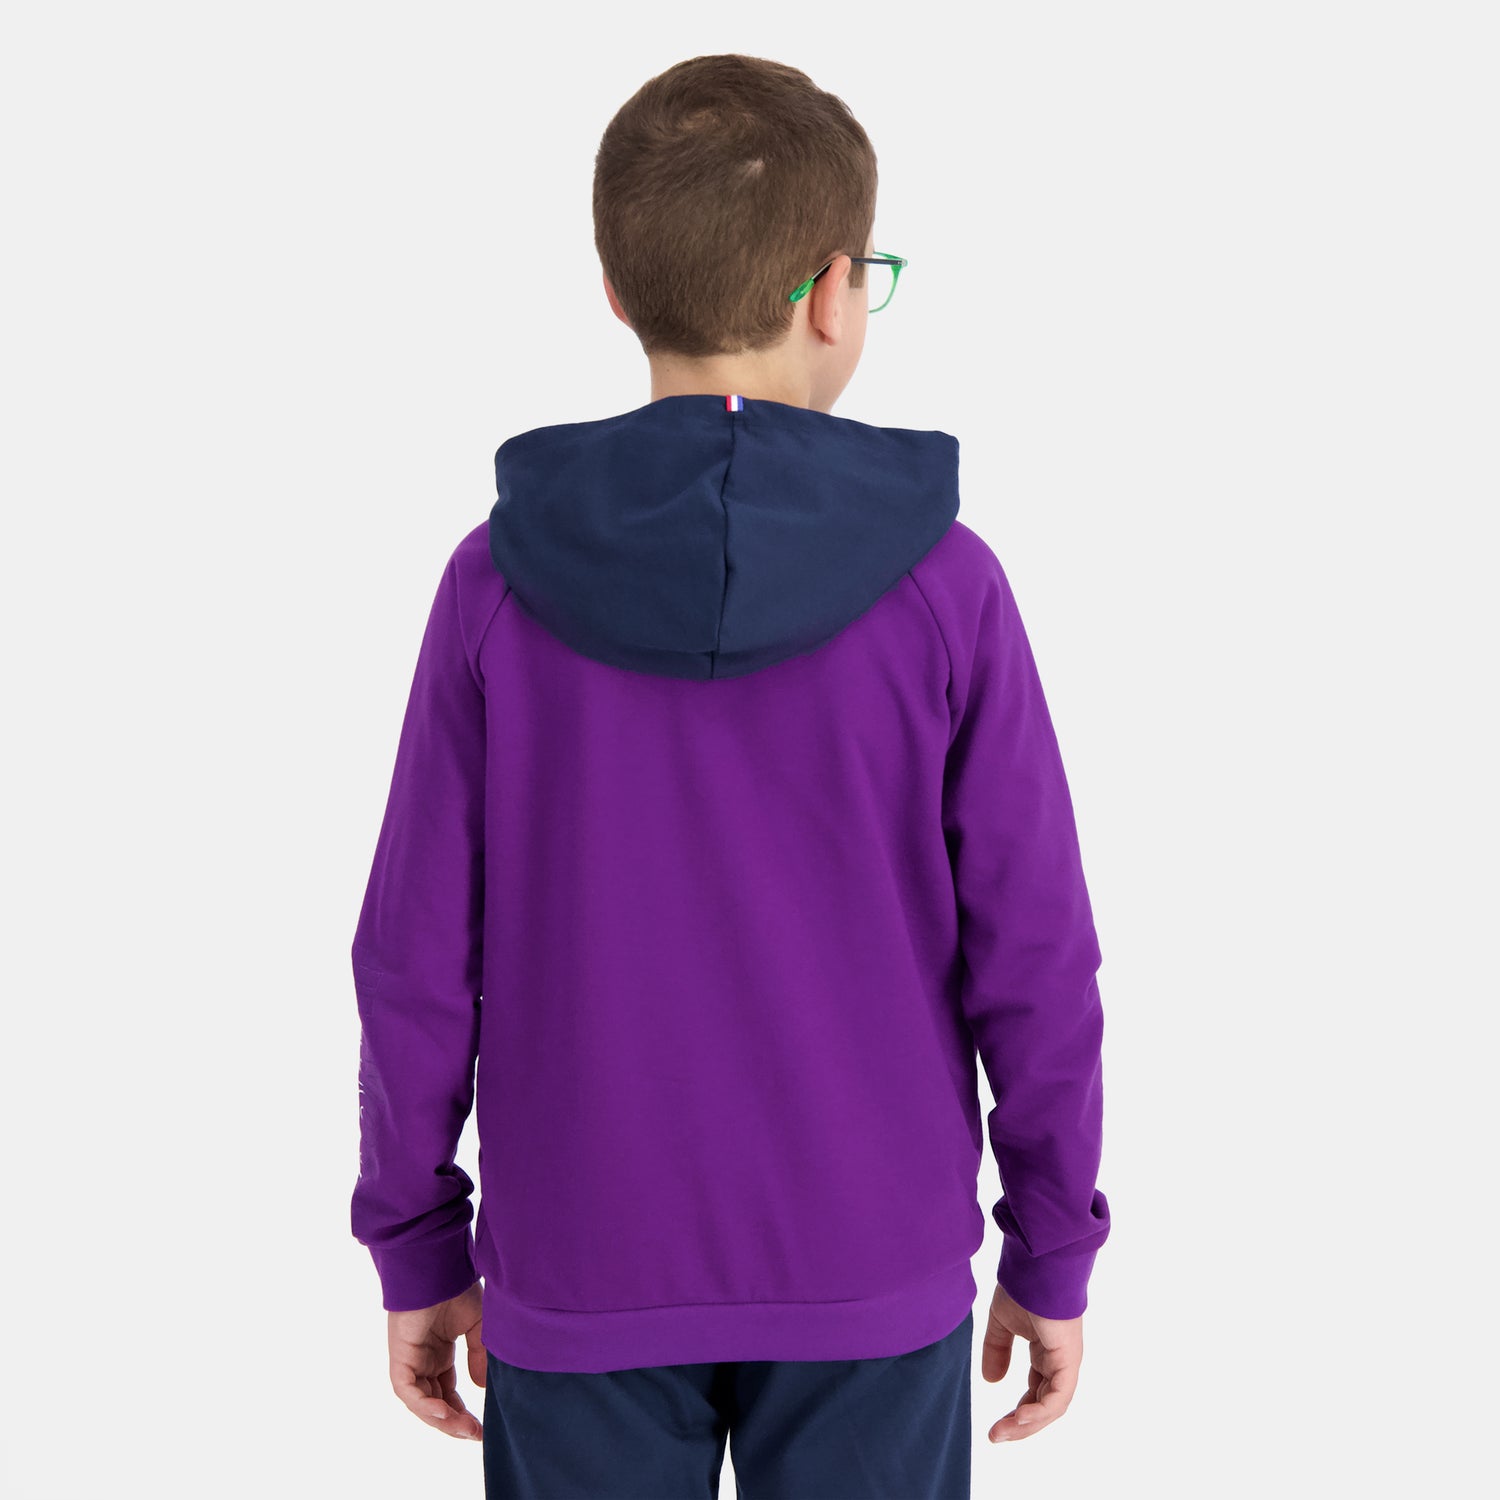 2410685-SAISON 2 Hoody N°1 Enfant violet j/dress  | Sudadera Con Capucha para Niño